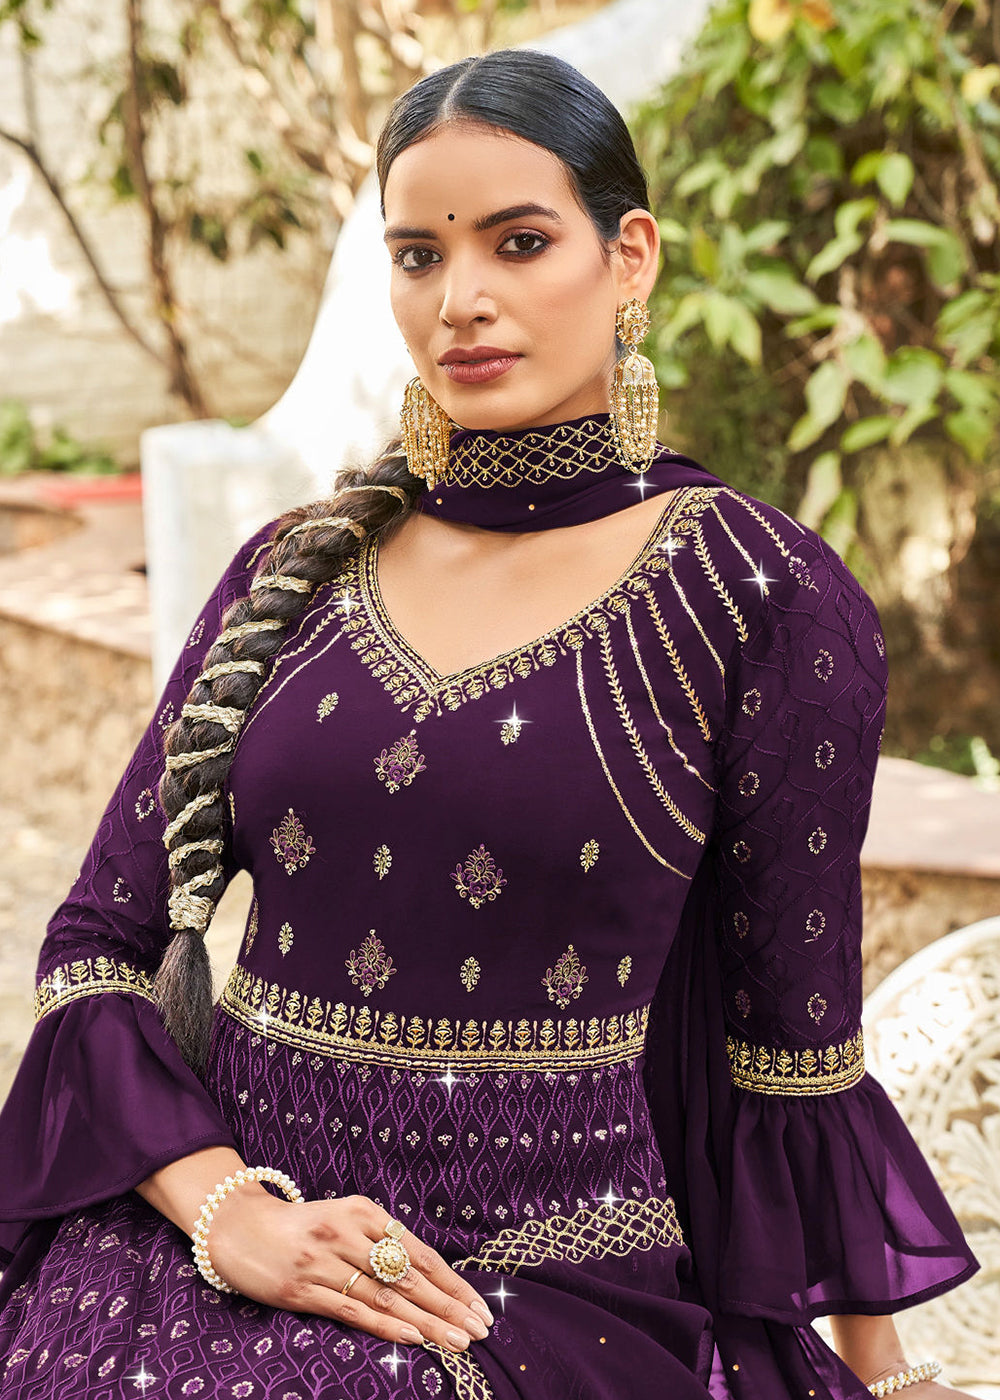 Buy Now Attractive Purple Georgette Fabric Wedding Wear Anarkali Suit Online in USA, UK, Australia, New Zealand, Canada & Worldwide at Empress Clothing.